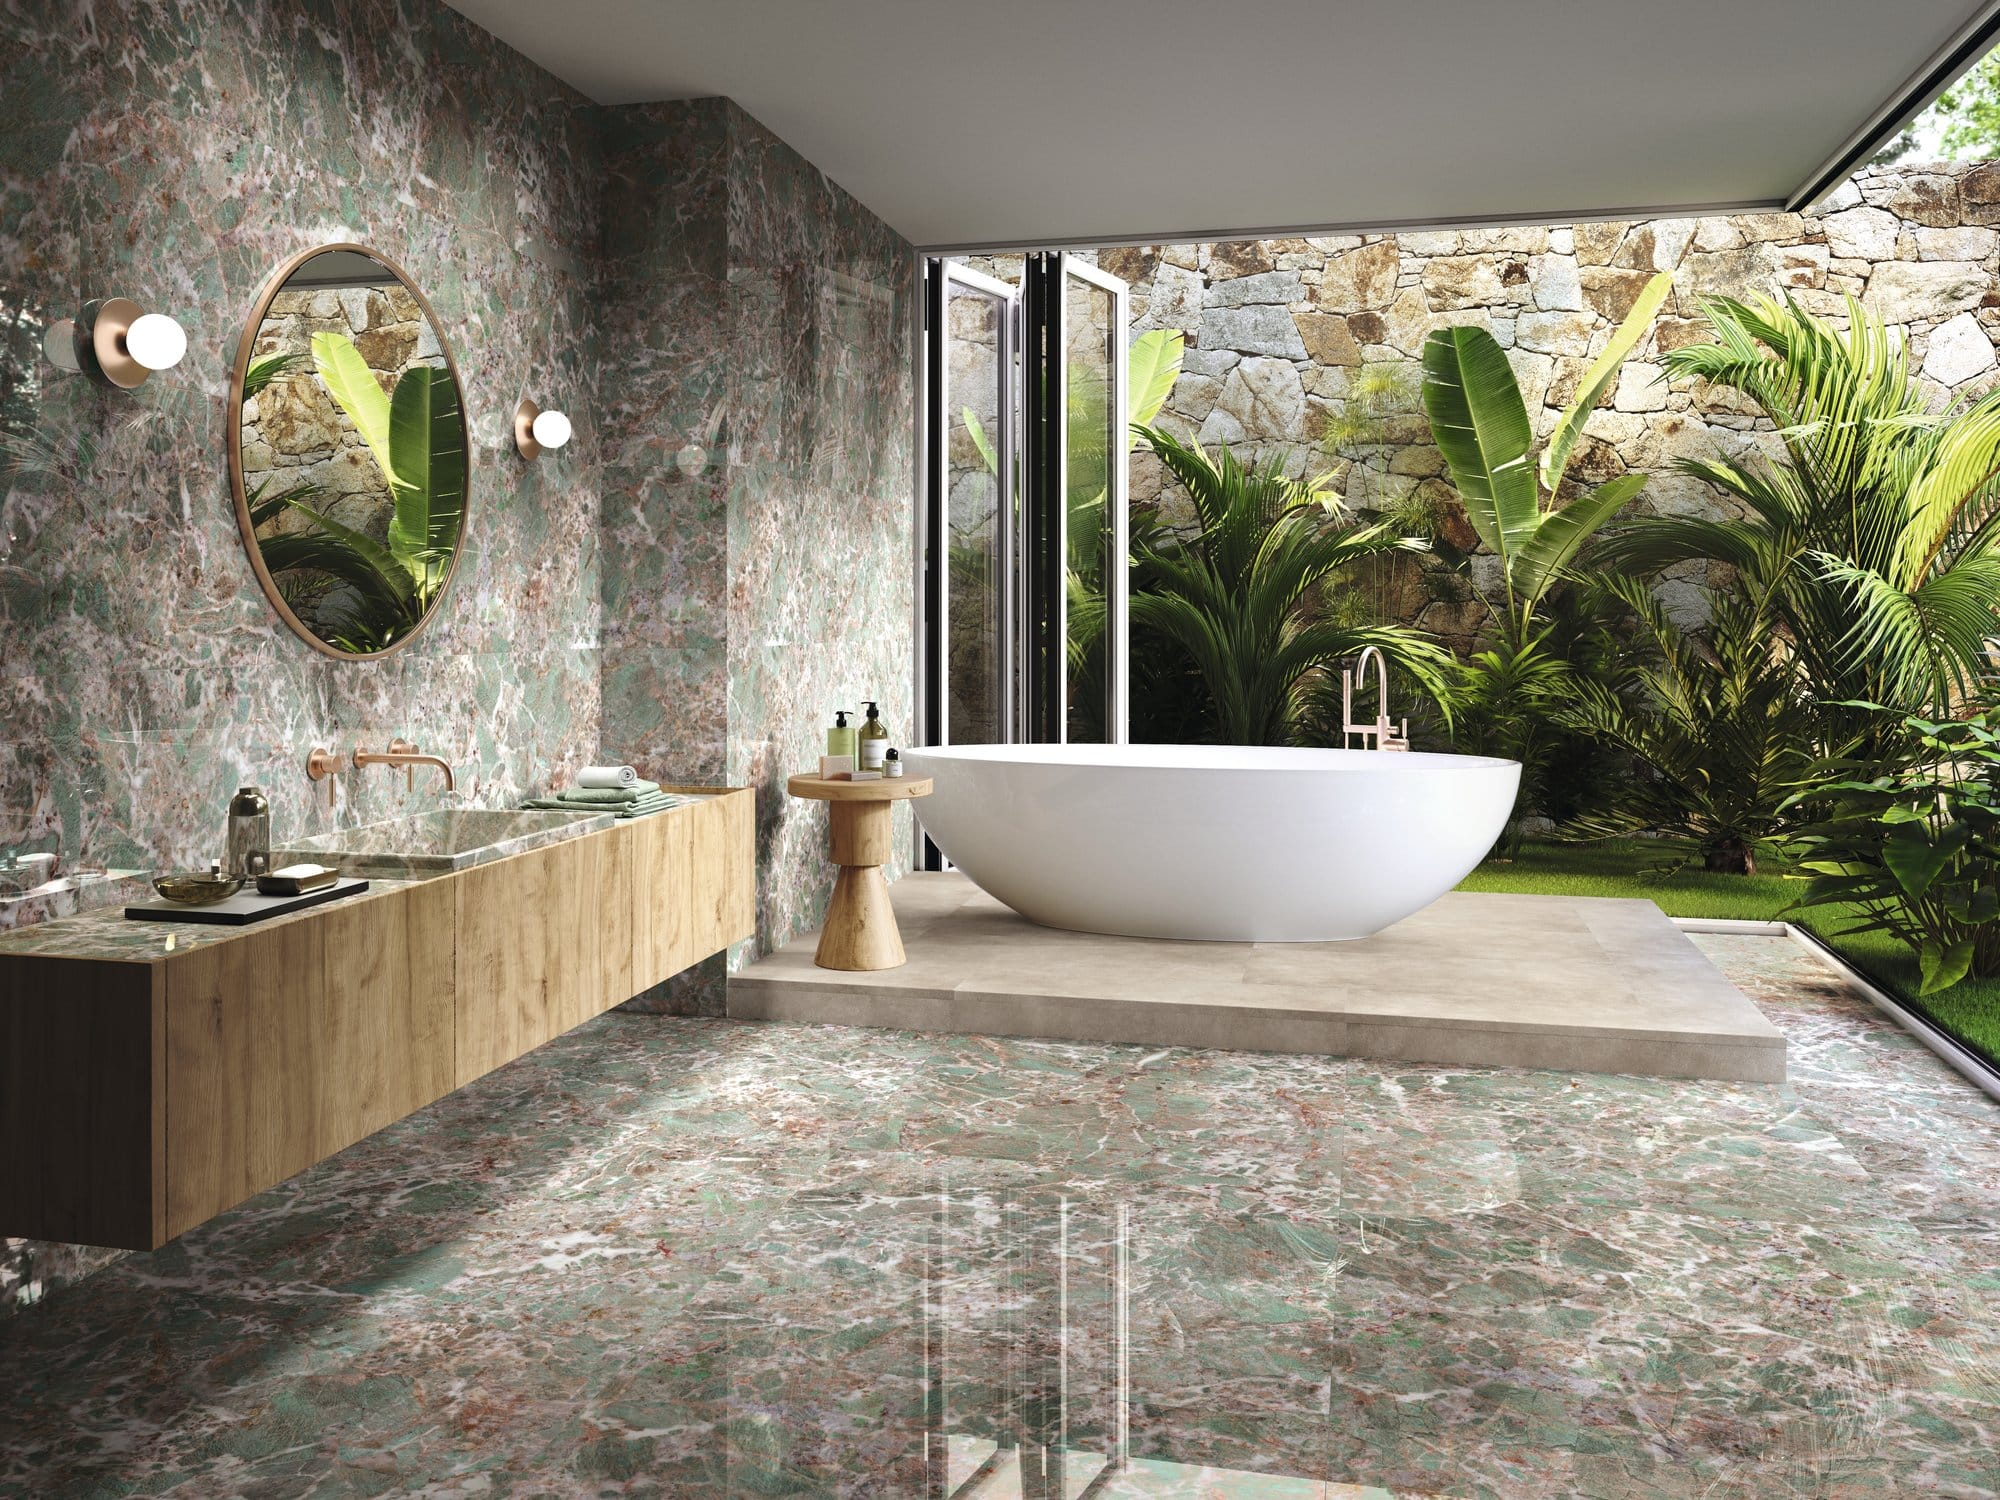 FLOOR CELAIN Porcelain Bathroom Marble Wall Flooring Tiles